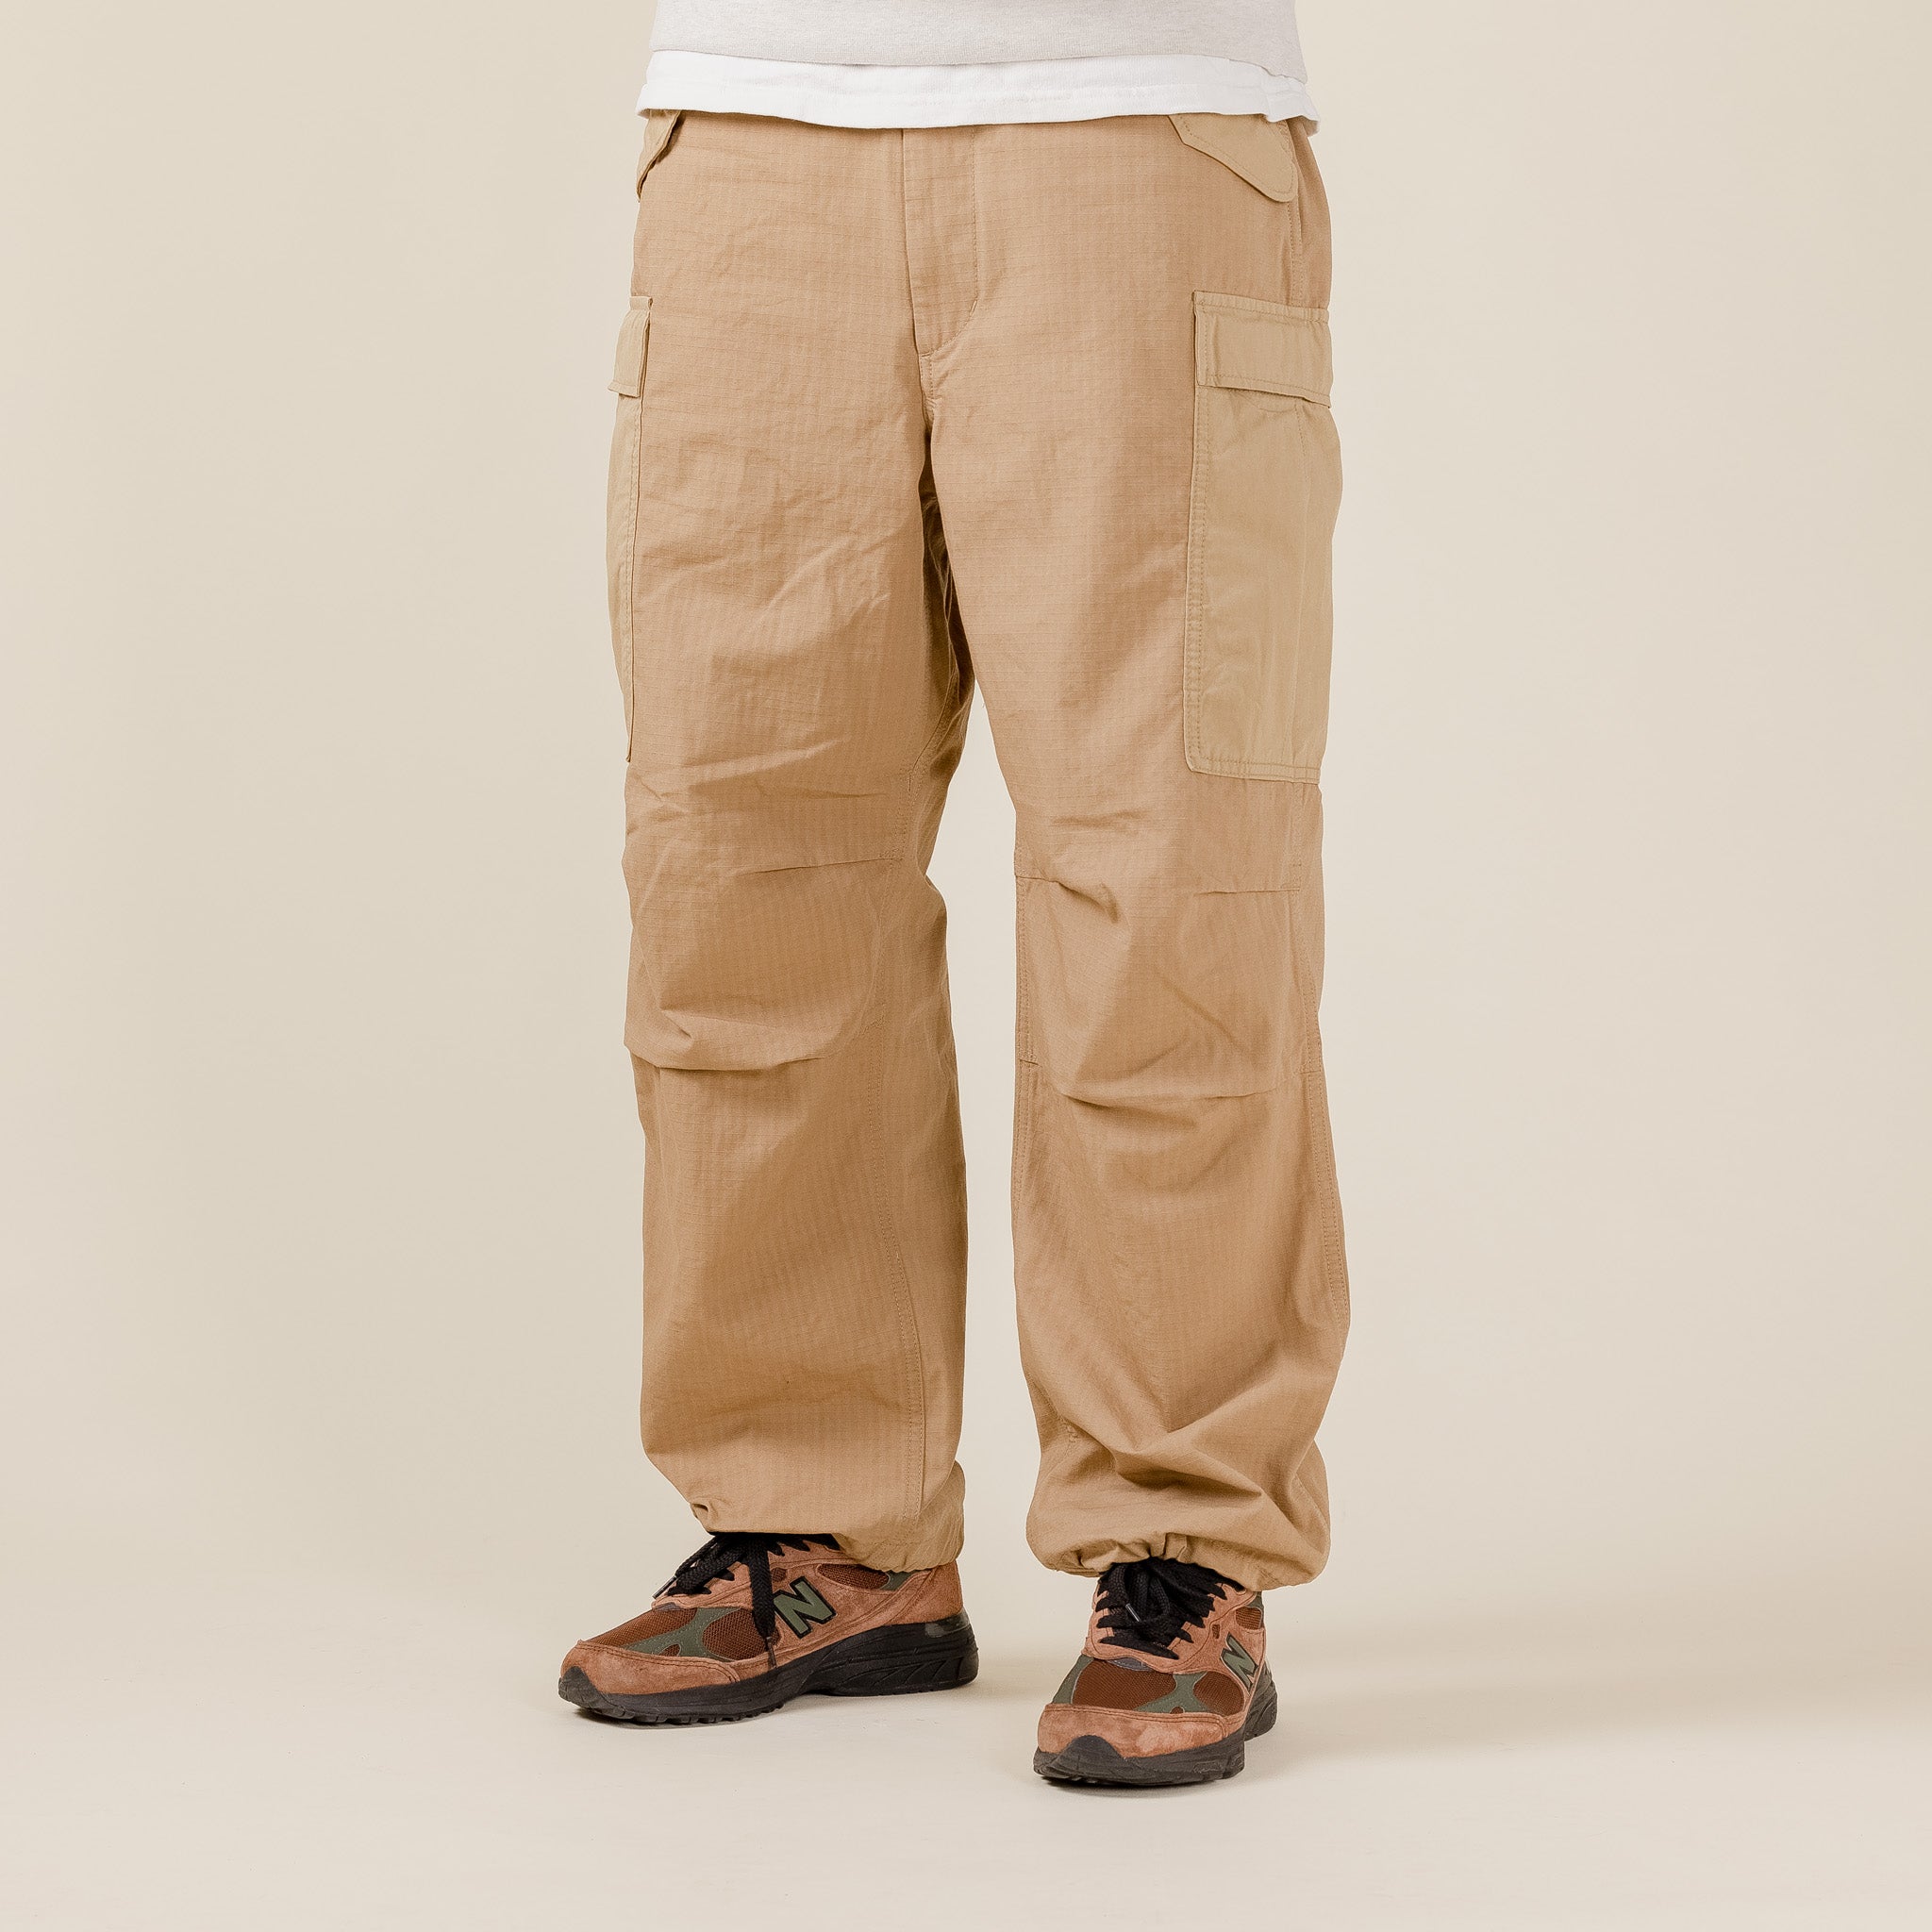 Cargo Trousers for Men UK Clearance,Men's Cargo Pants Hip Hop